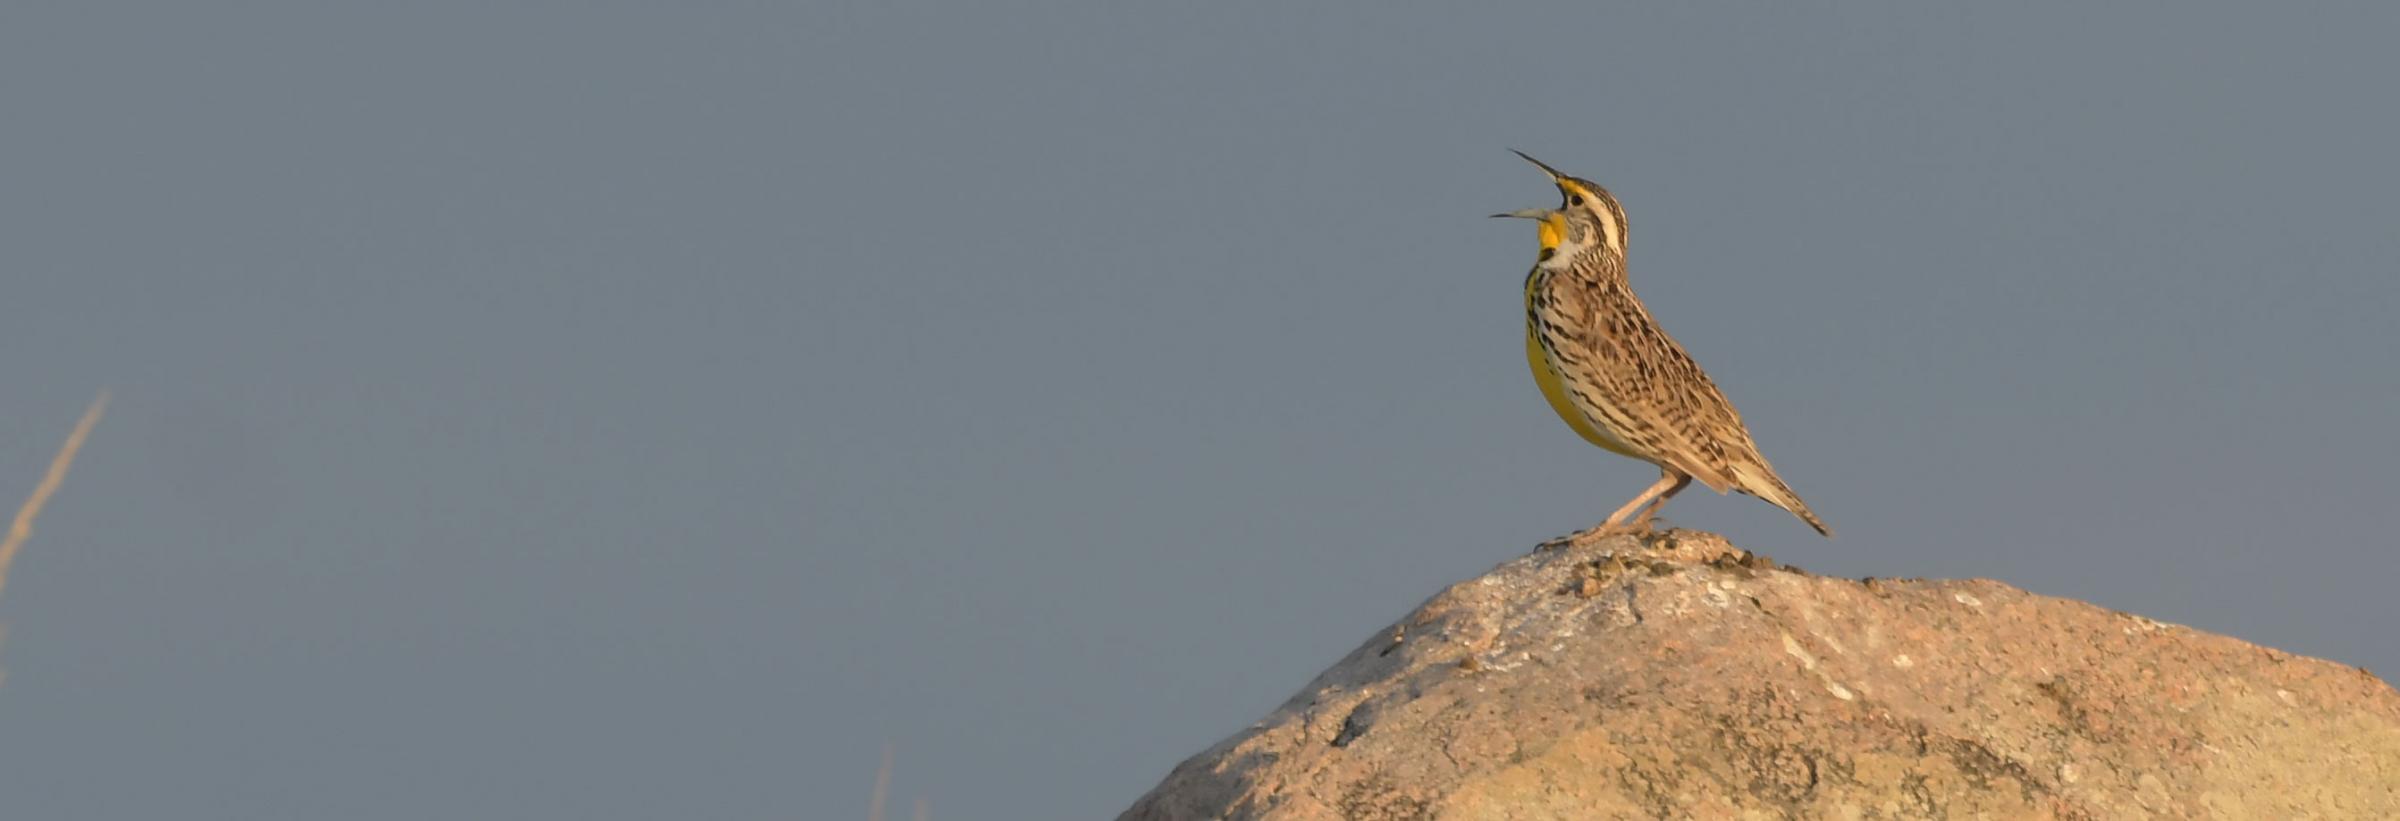 Meadowlark singing on boulder